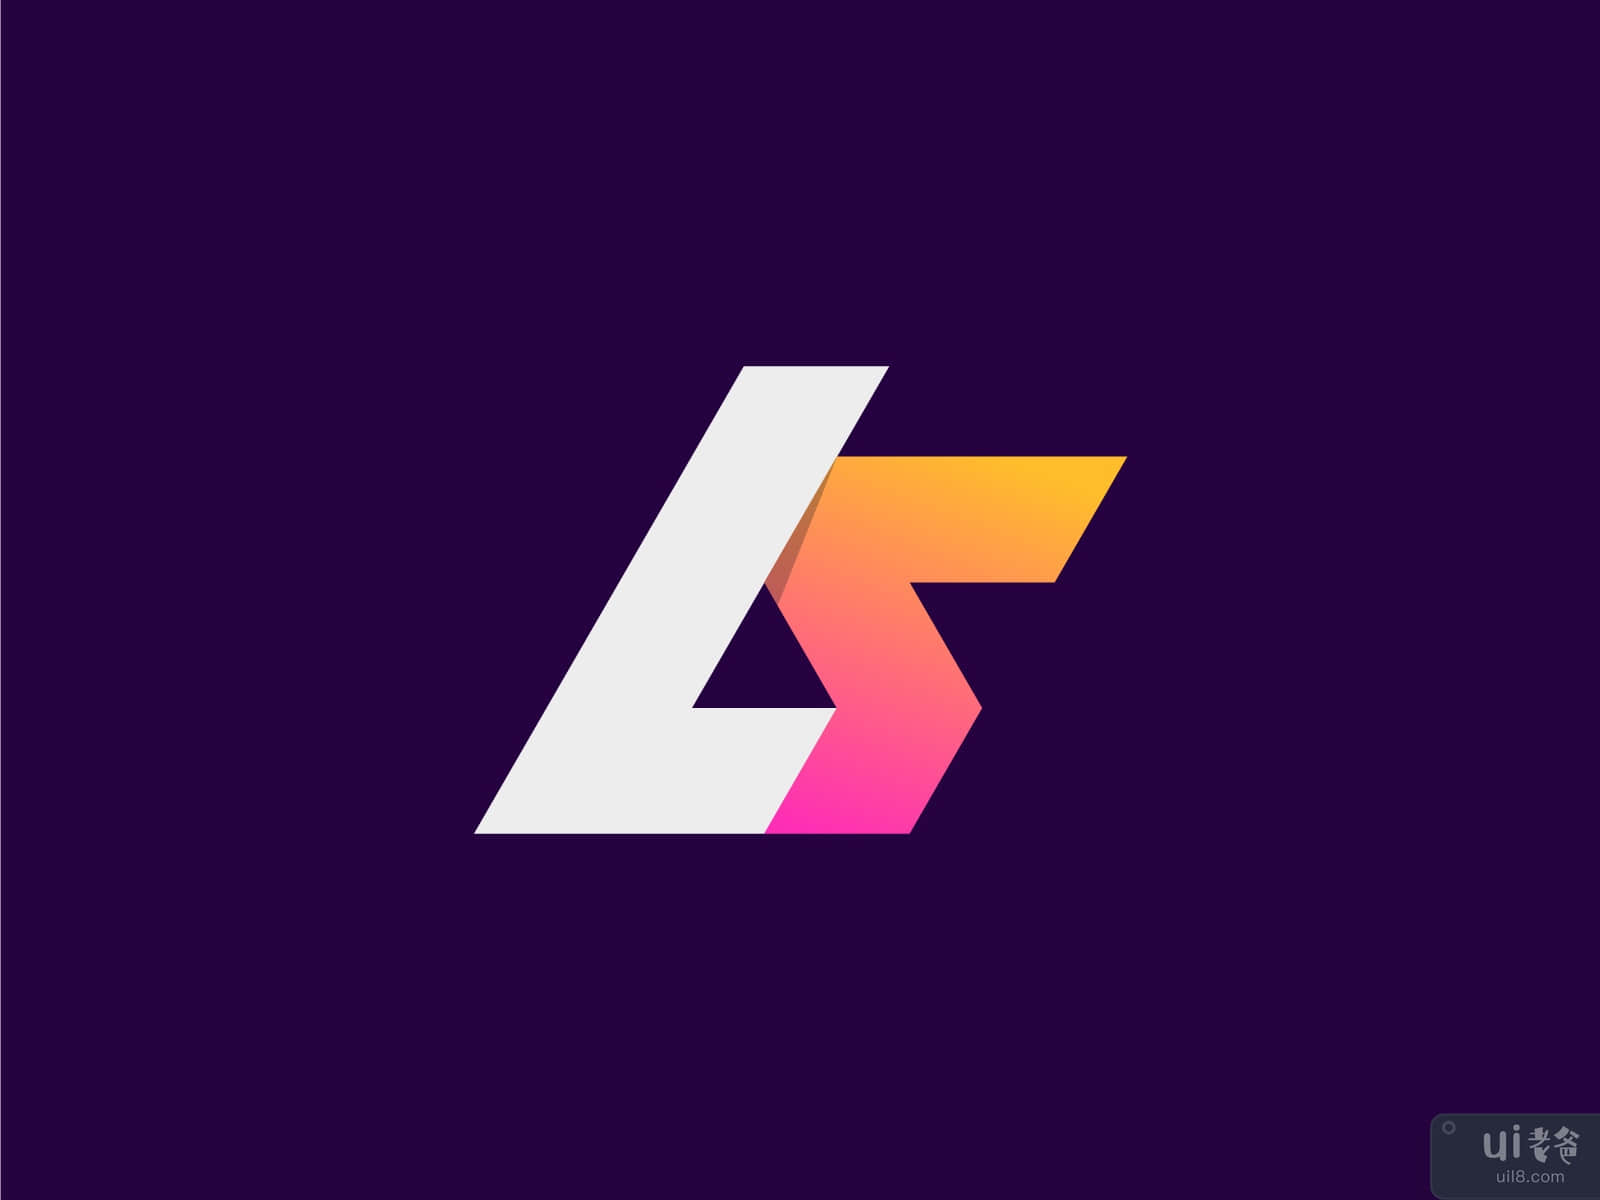 Levkury - 标志和品牌设计(Levkury - Logo and Branding Design)插图4